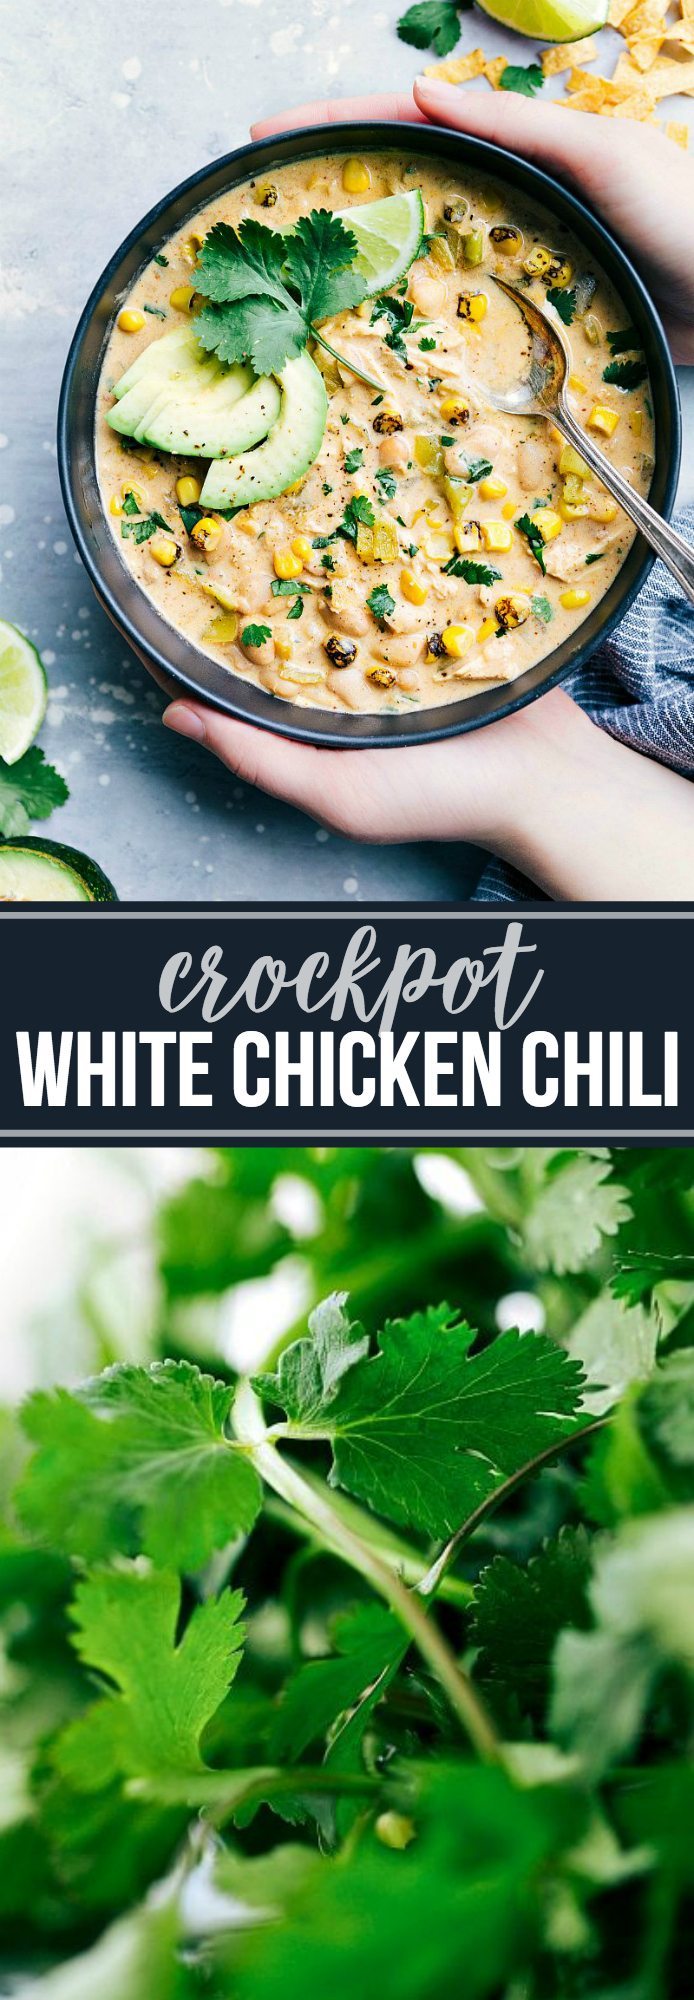 white chicken chili in crock pot